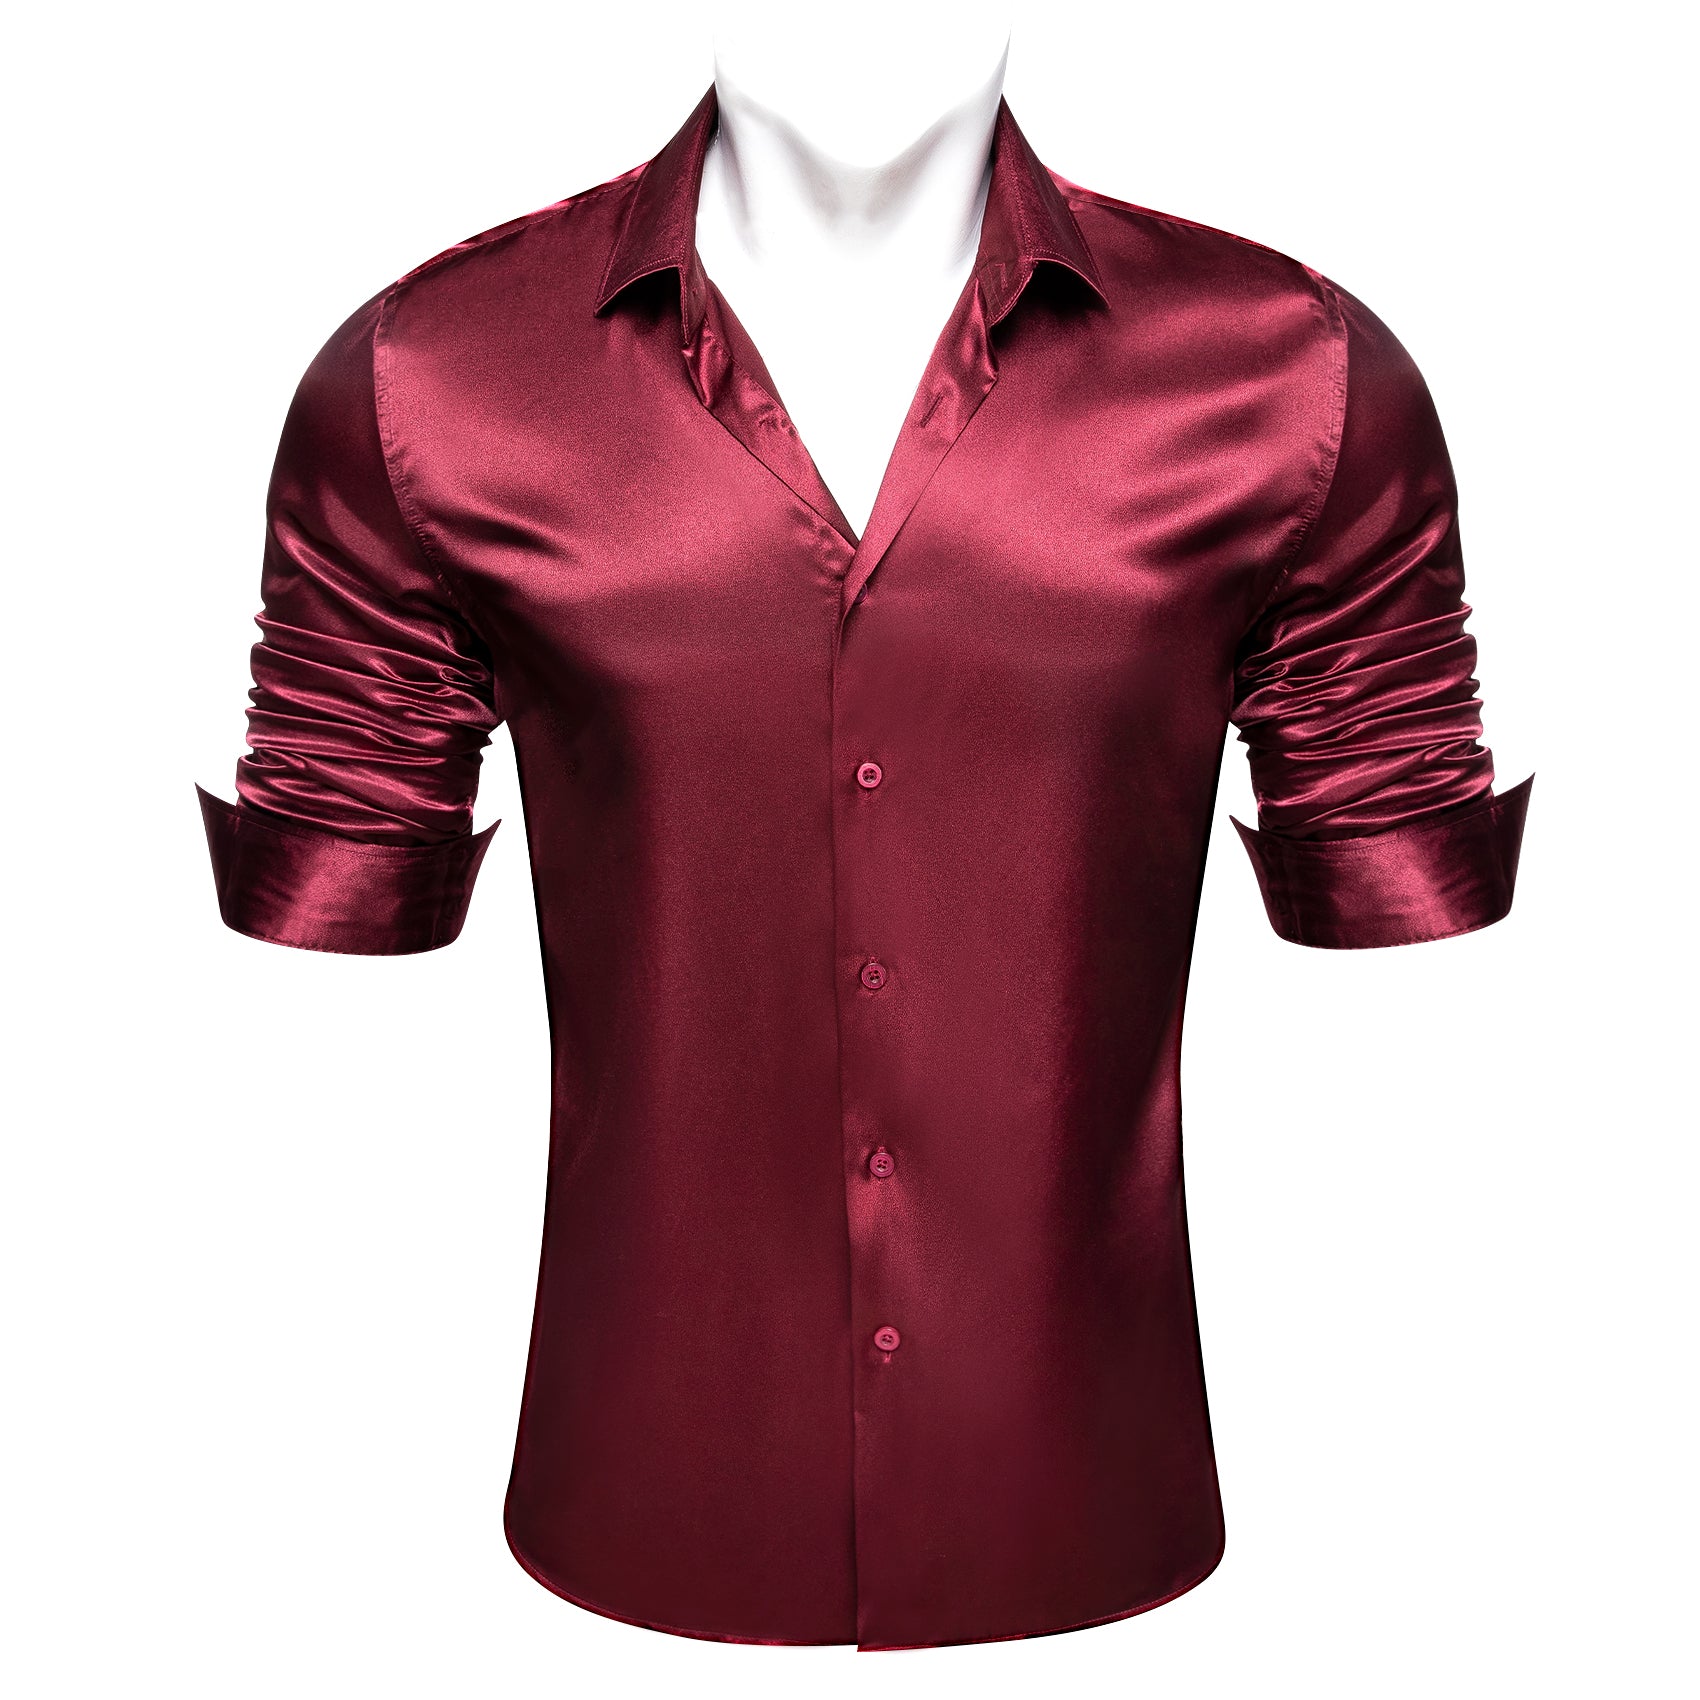 Barry.wang Long Sleeve Shirt Maroon Red Solid Silk Men's Shirt